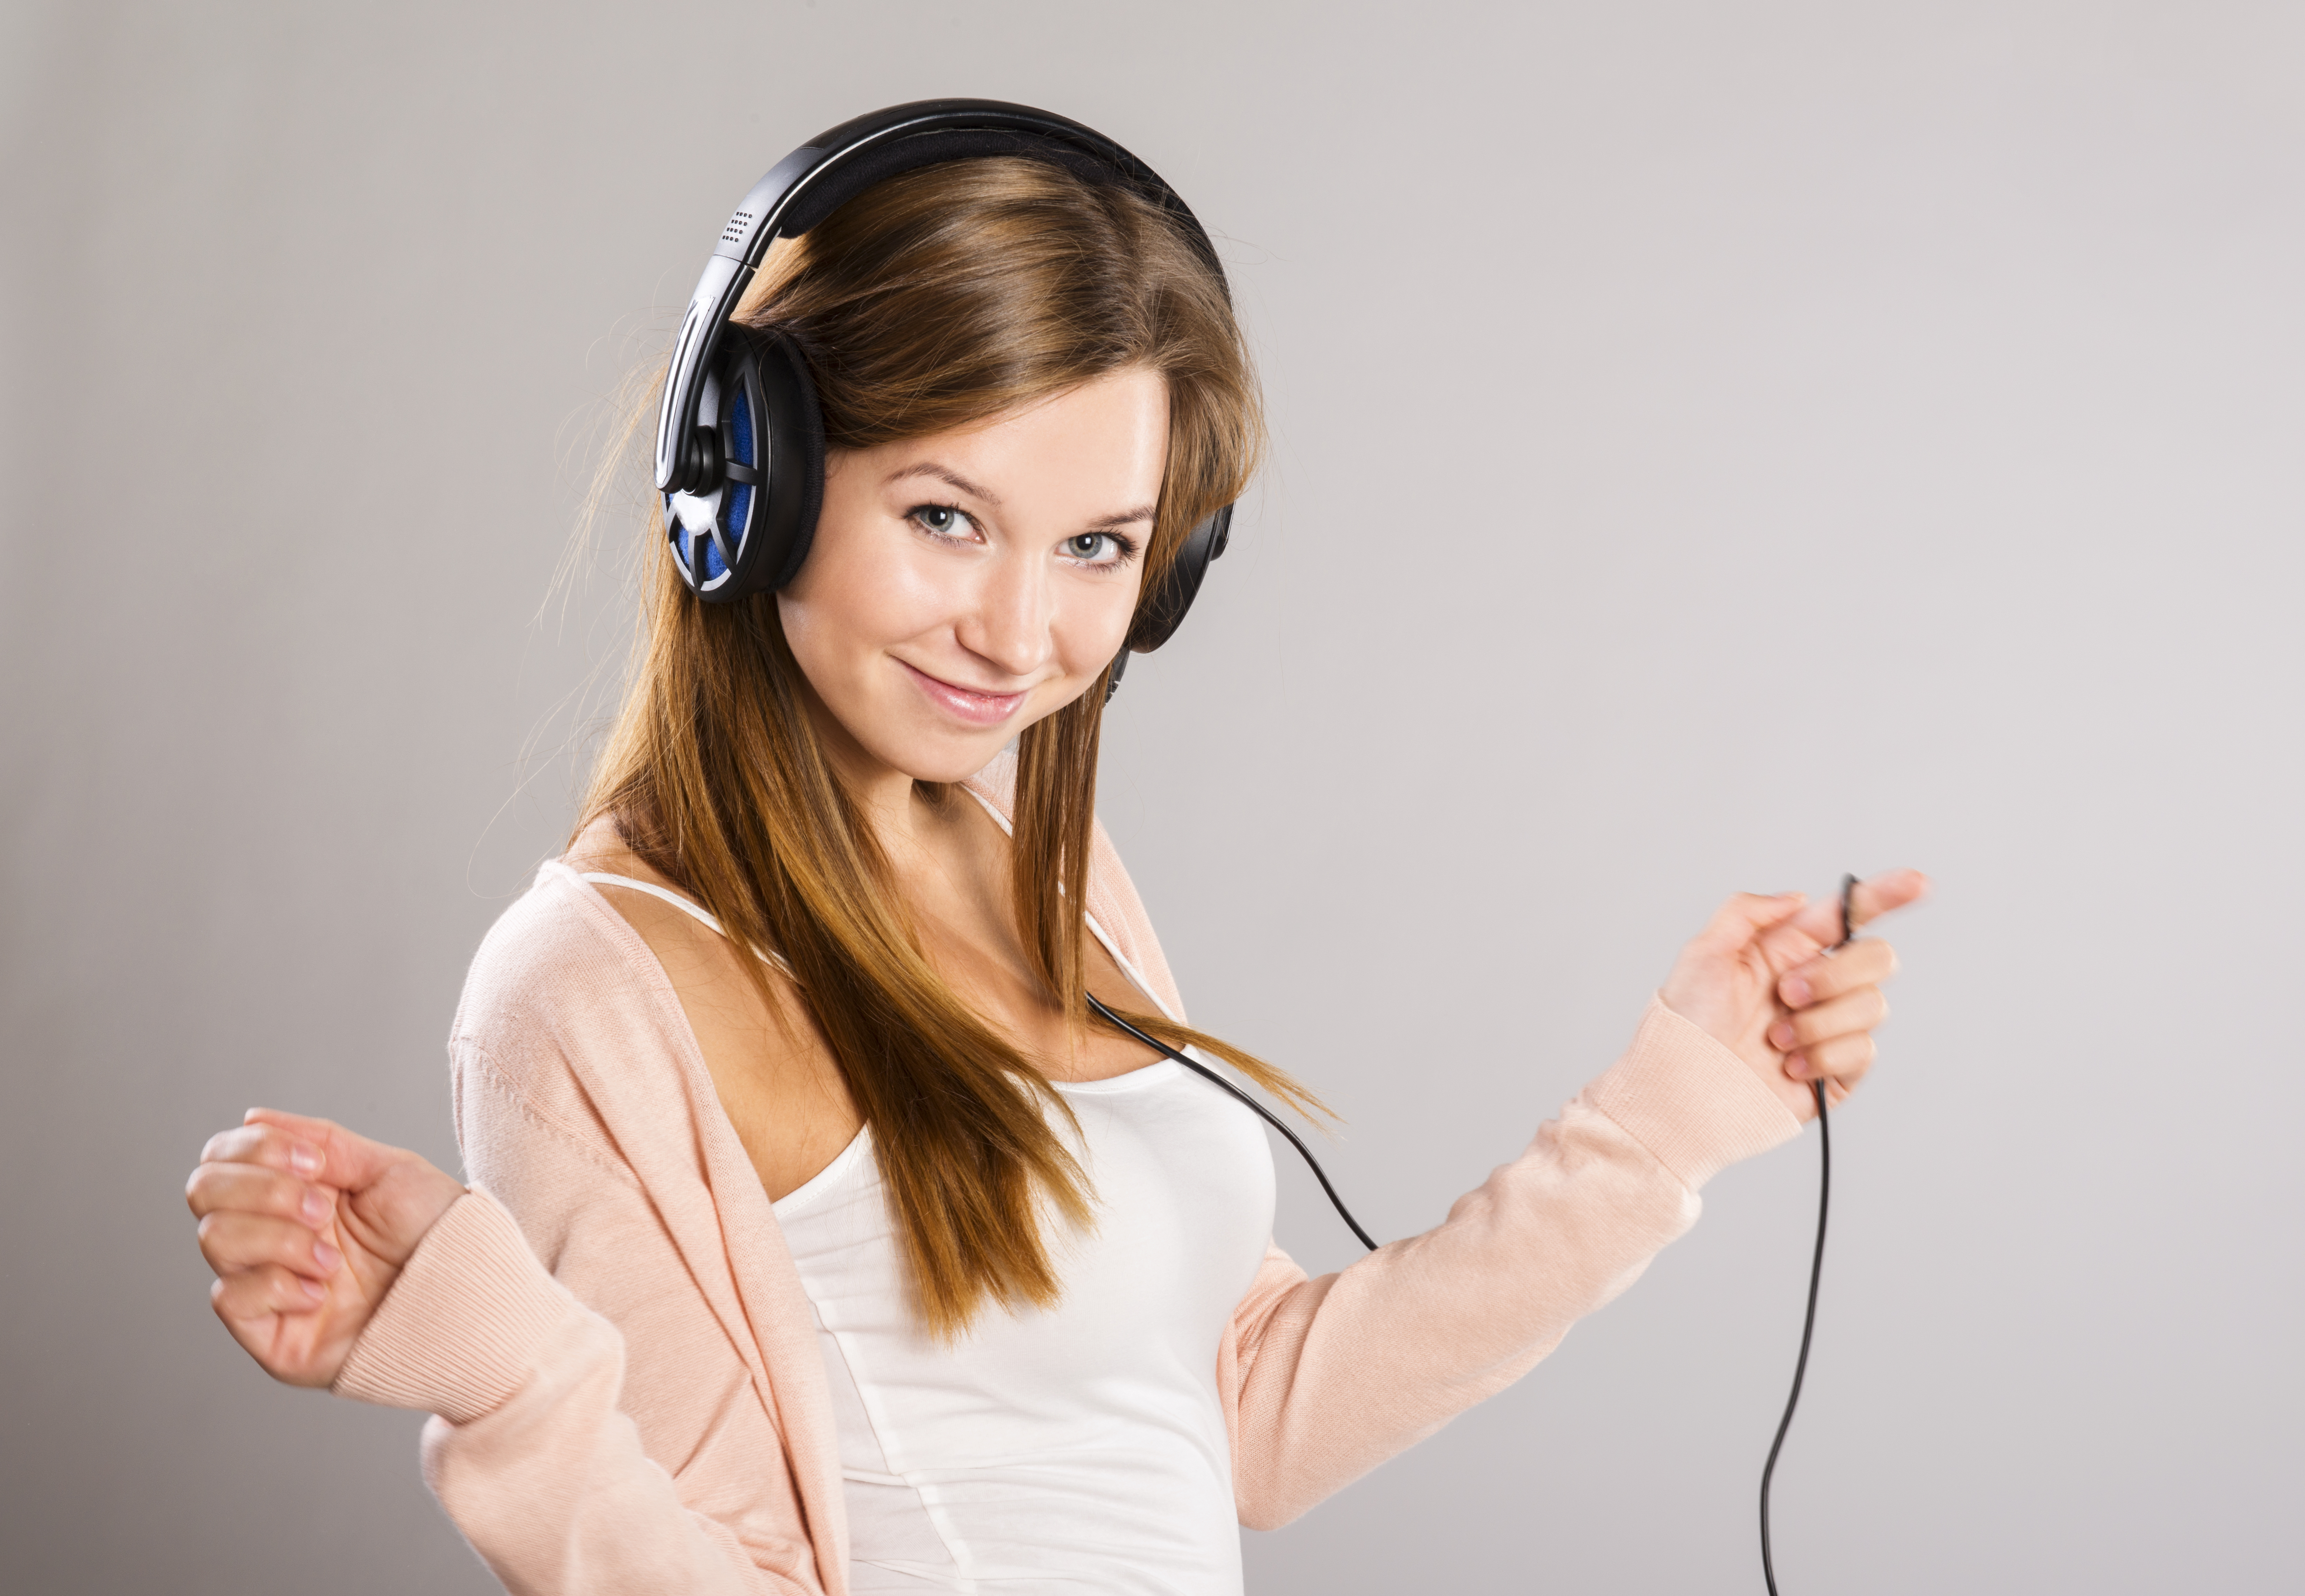 graphicstock-attractive-girl-with-headphones-on-gray-background_B06ezkVMiWW.jpg